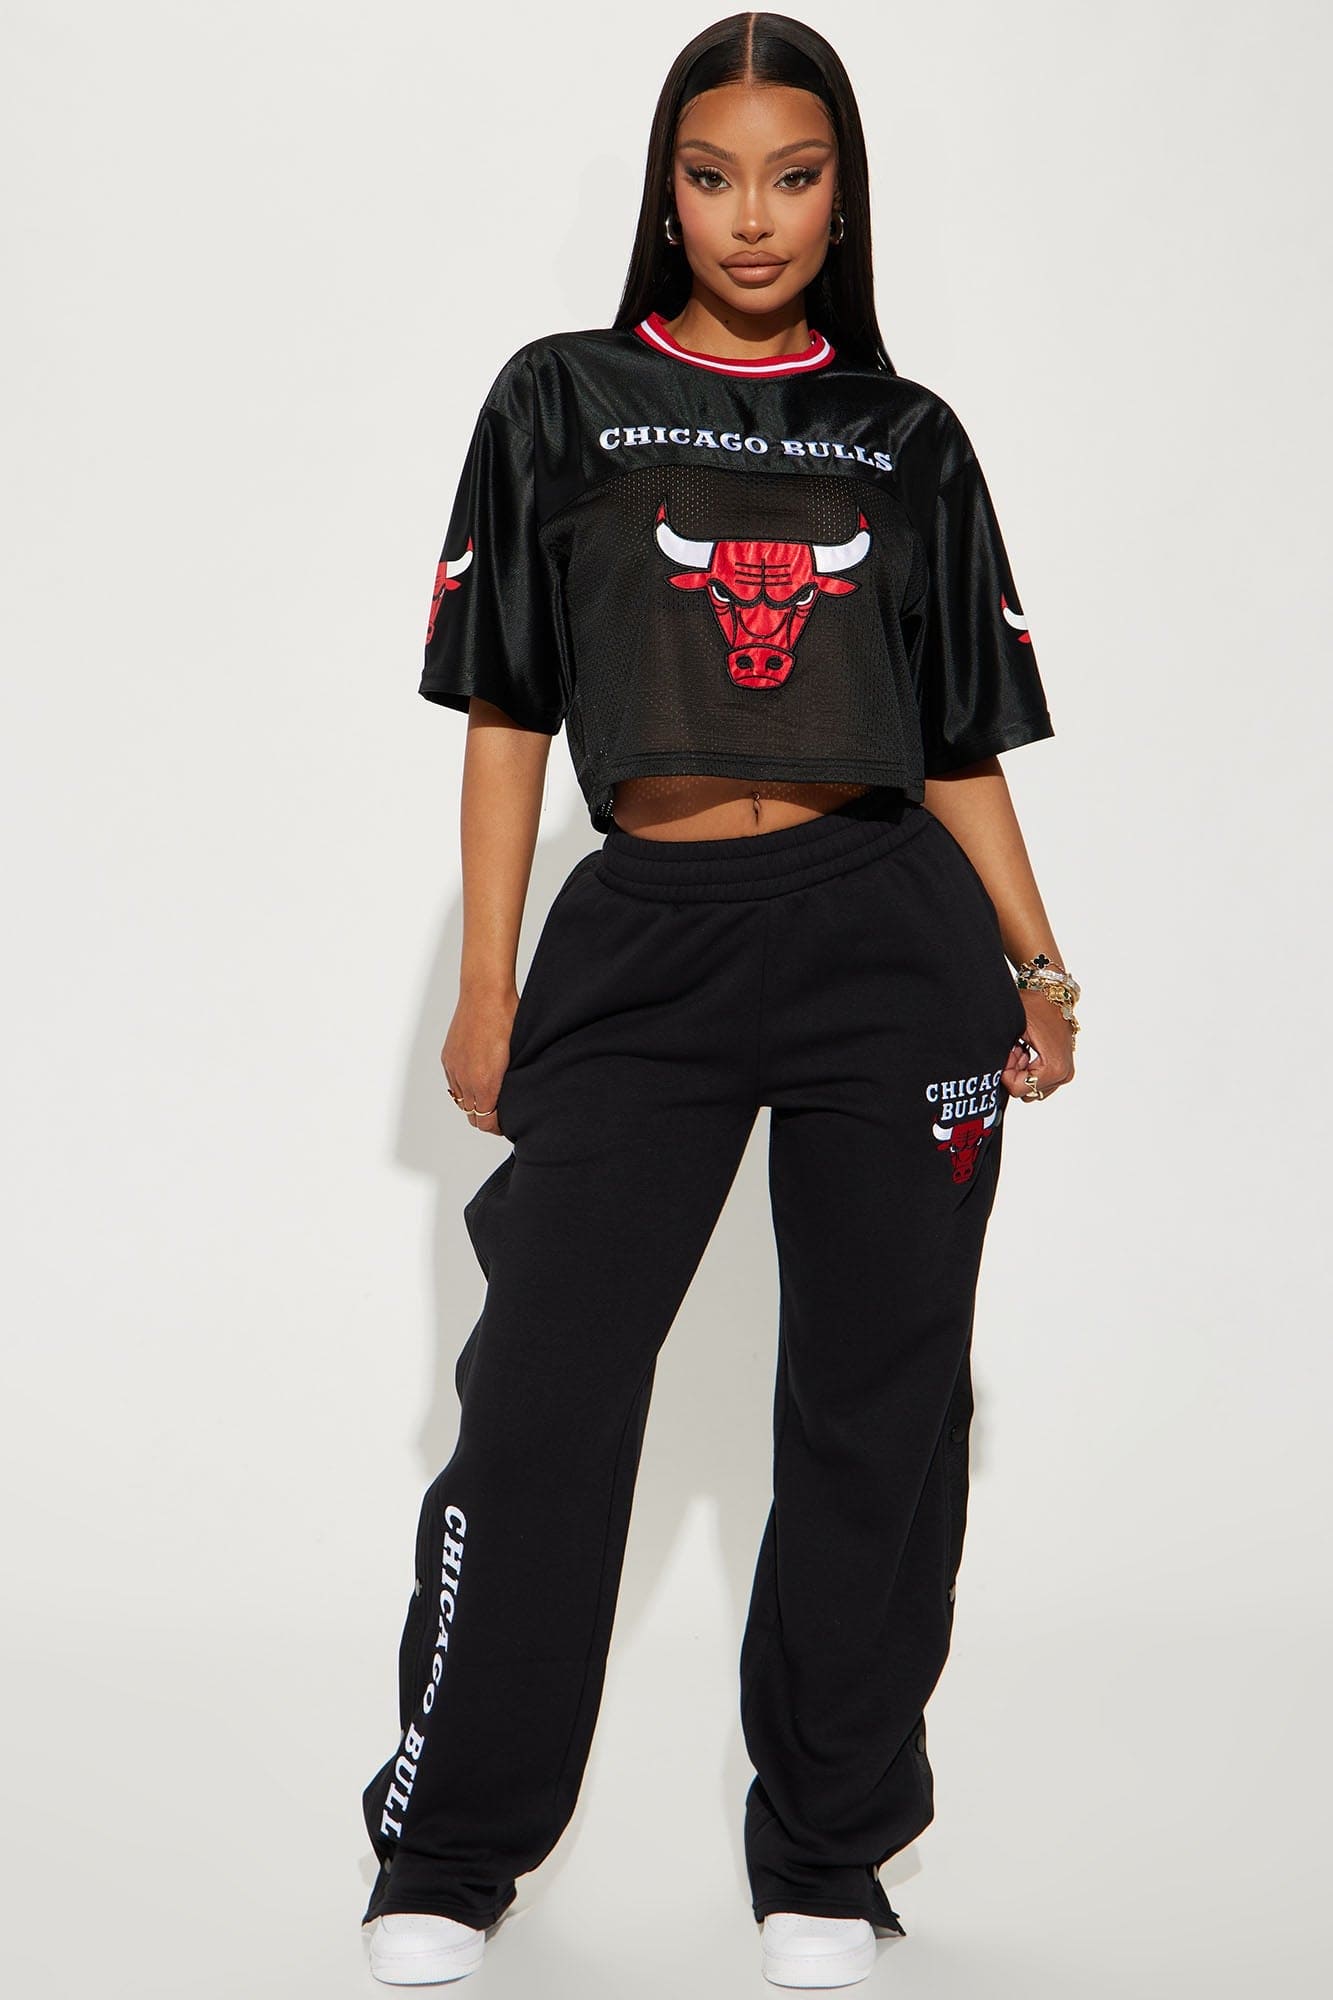 Chicago Bulls Snap Button Pants - Black - HCWP 